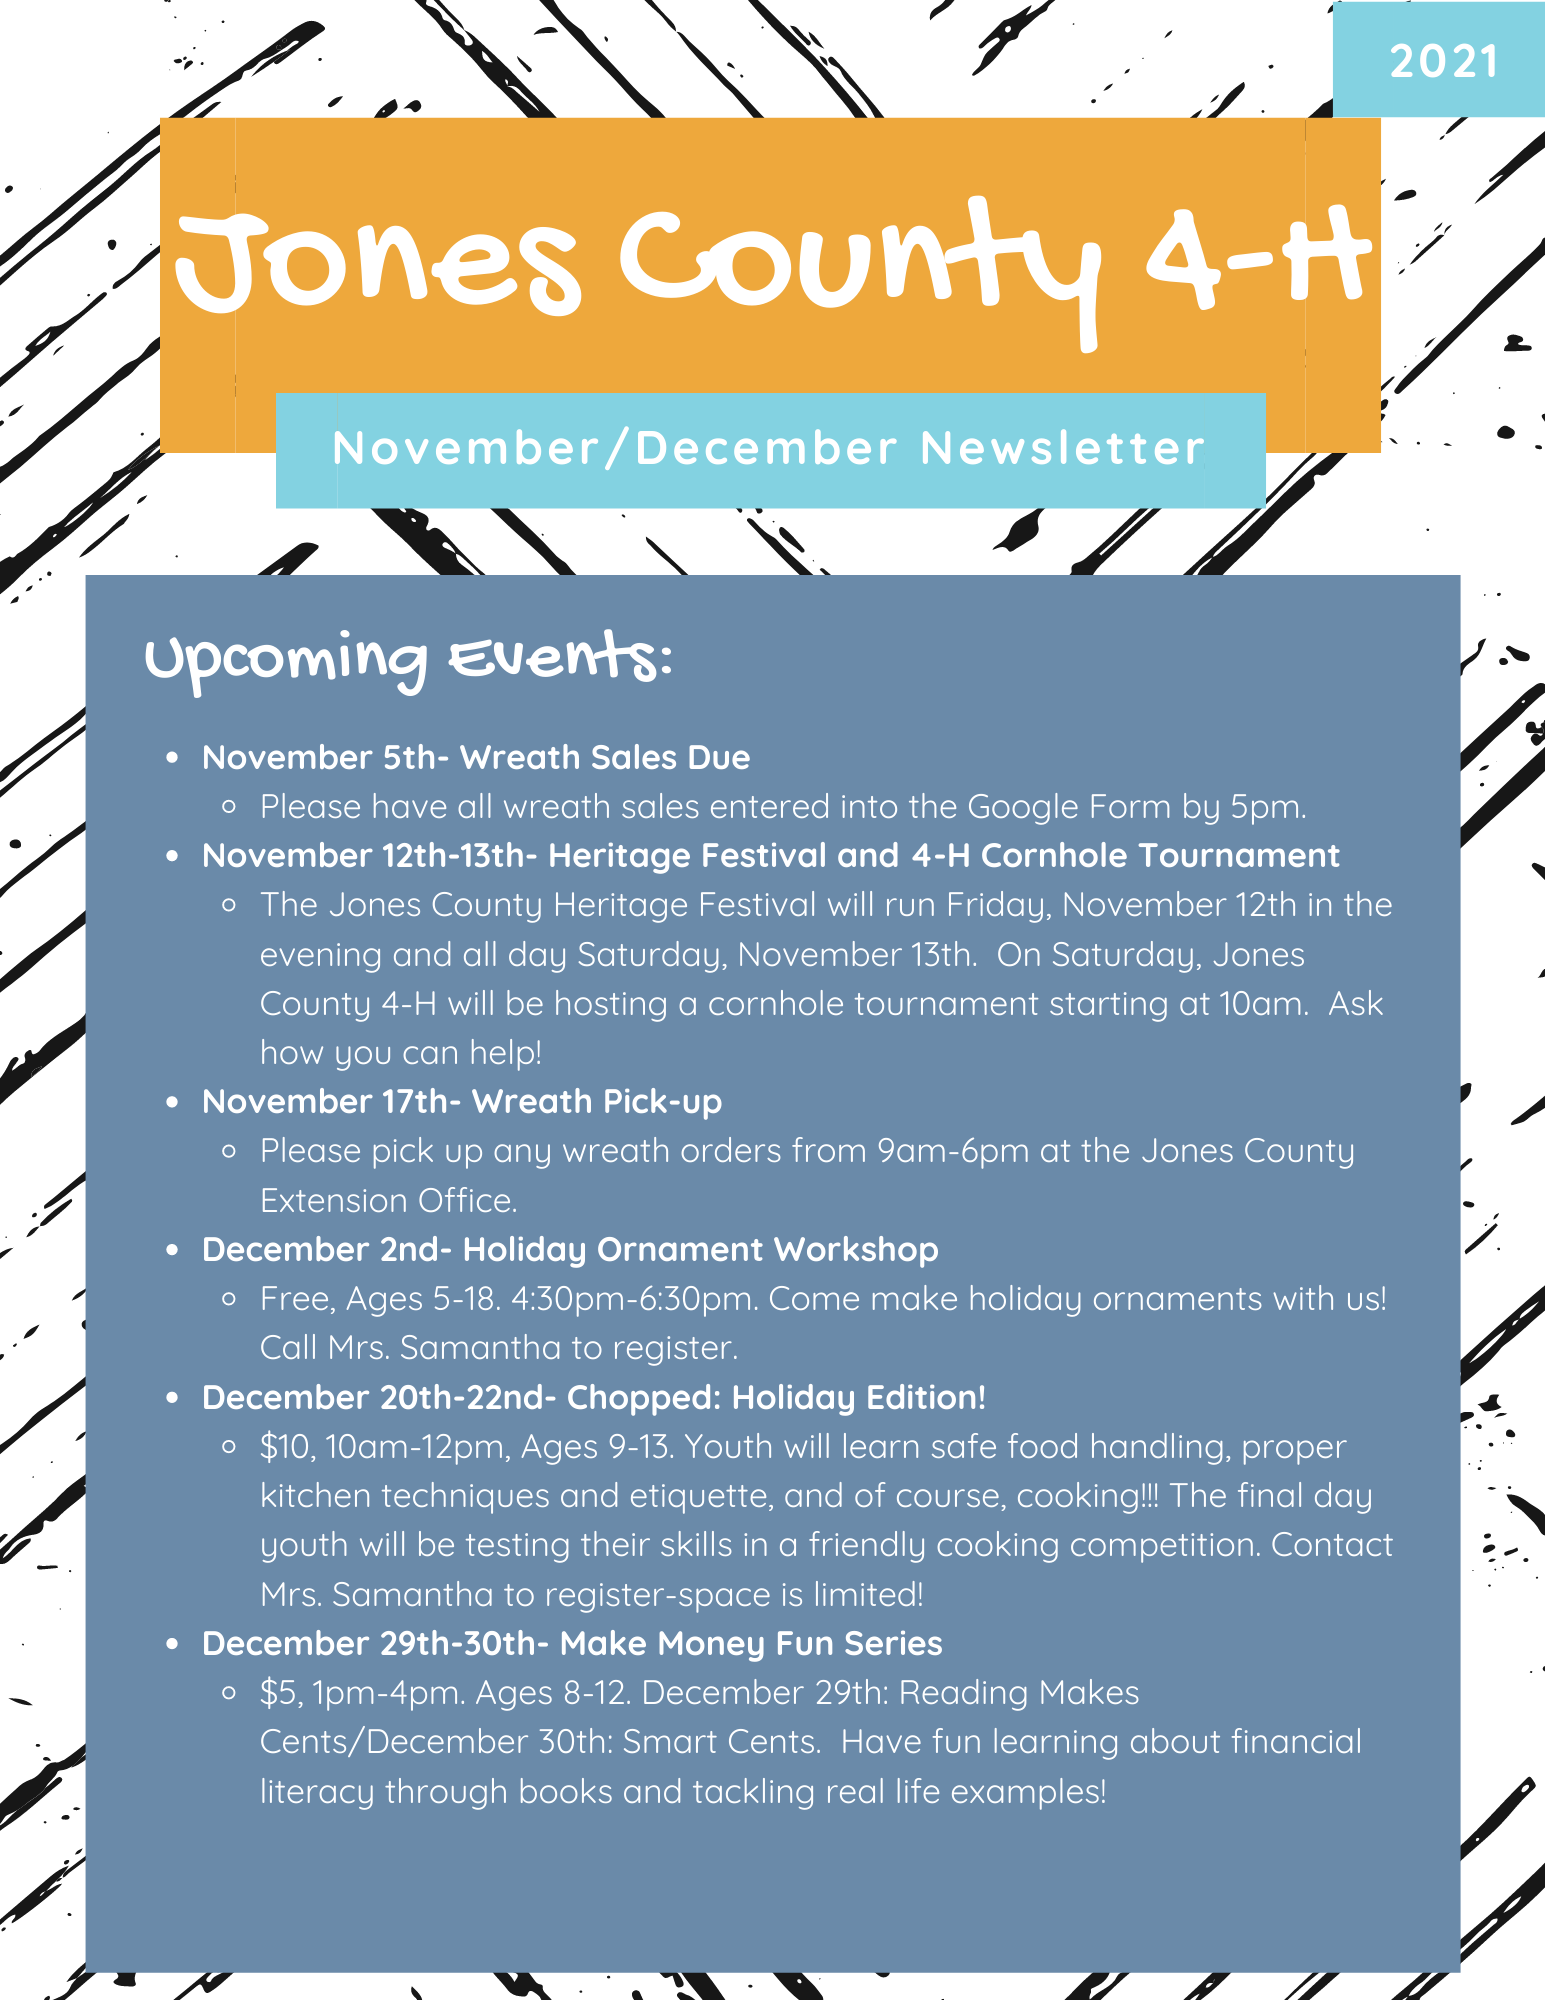 Jones County 4-H newsletter